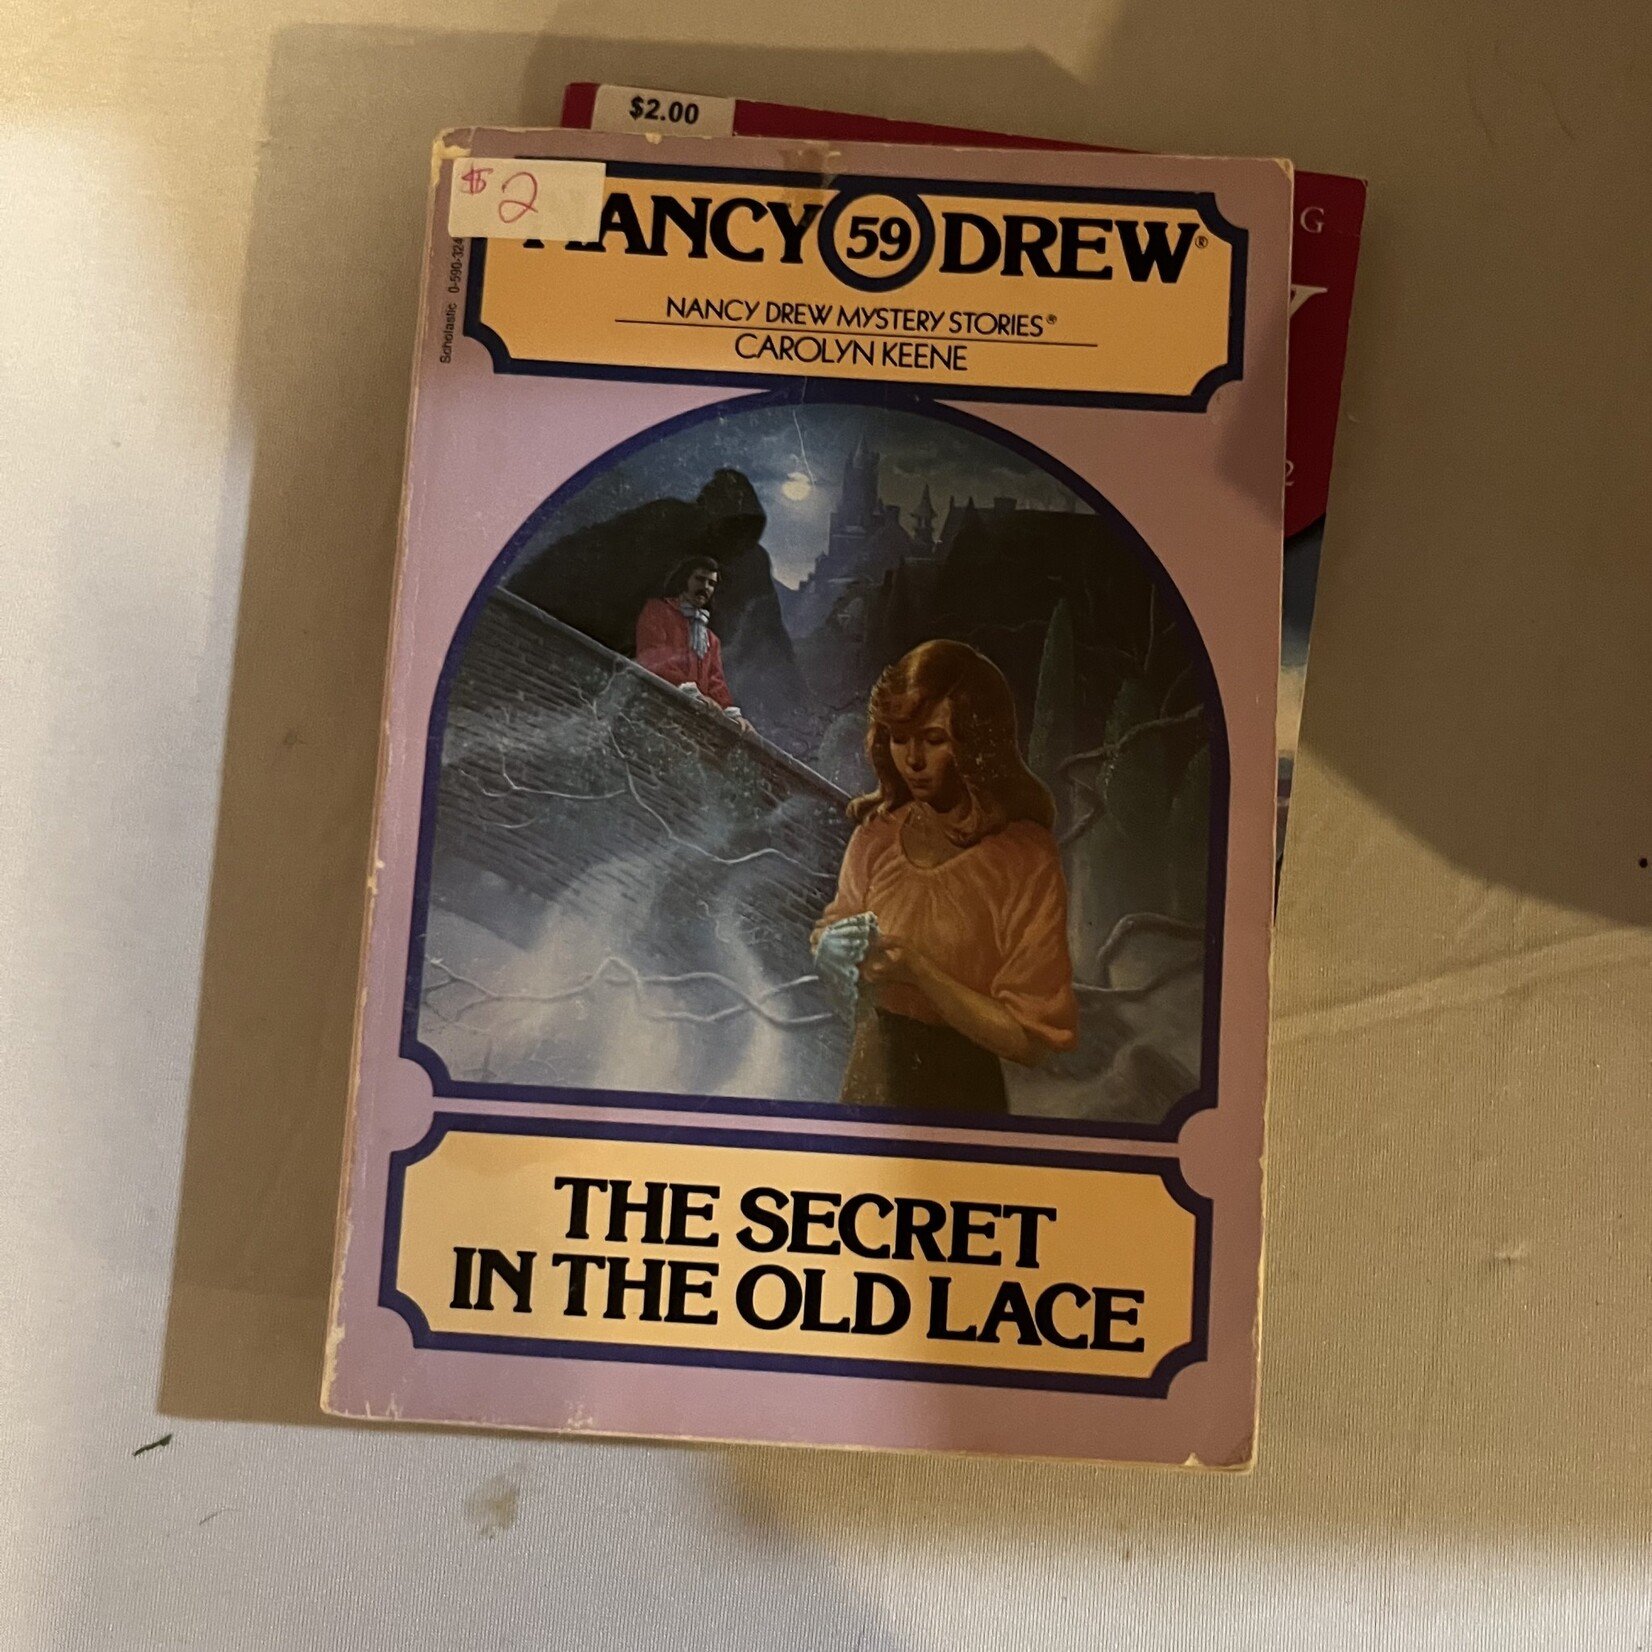 Nancy Drew - The Secret in the Old Lace #59